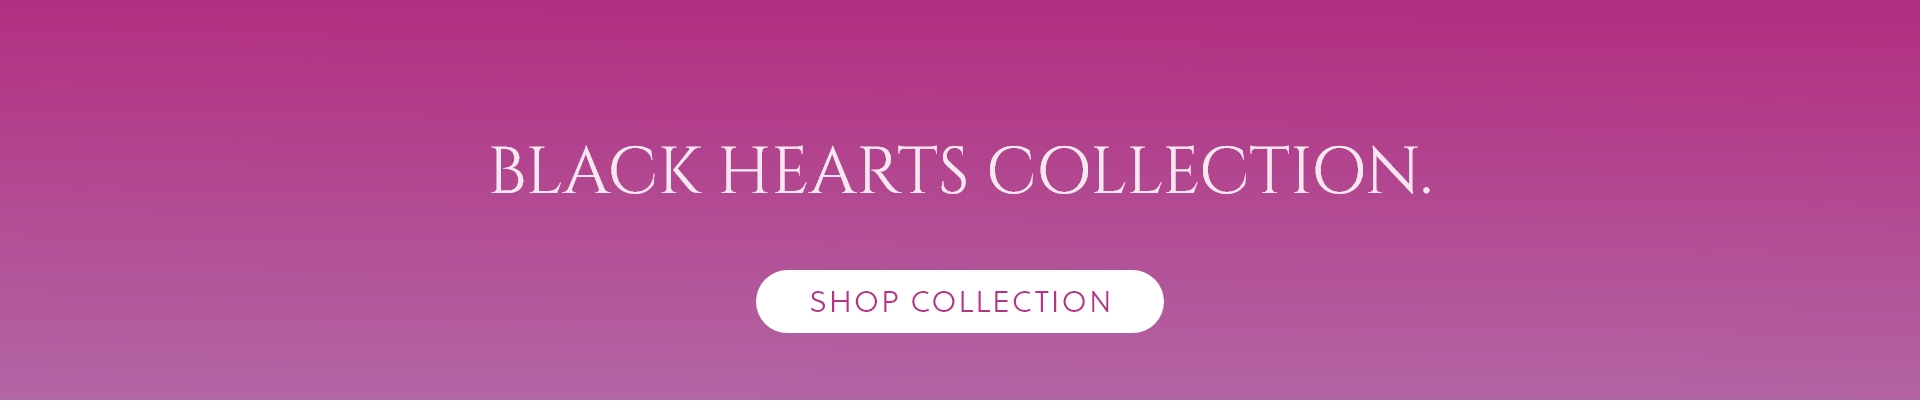 black_hearts_collection_desktop